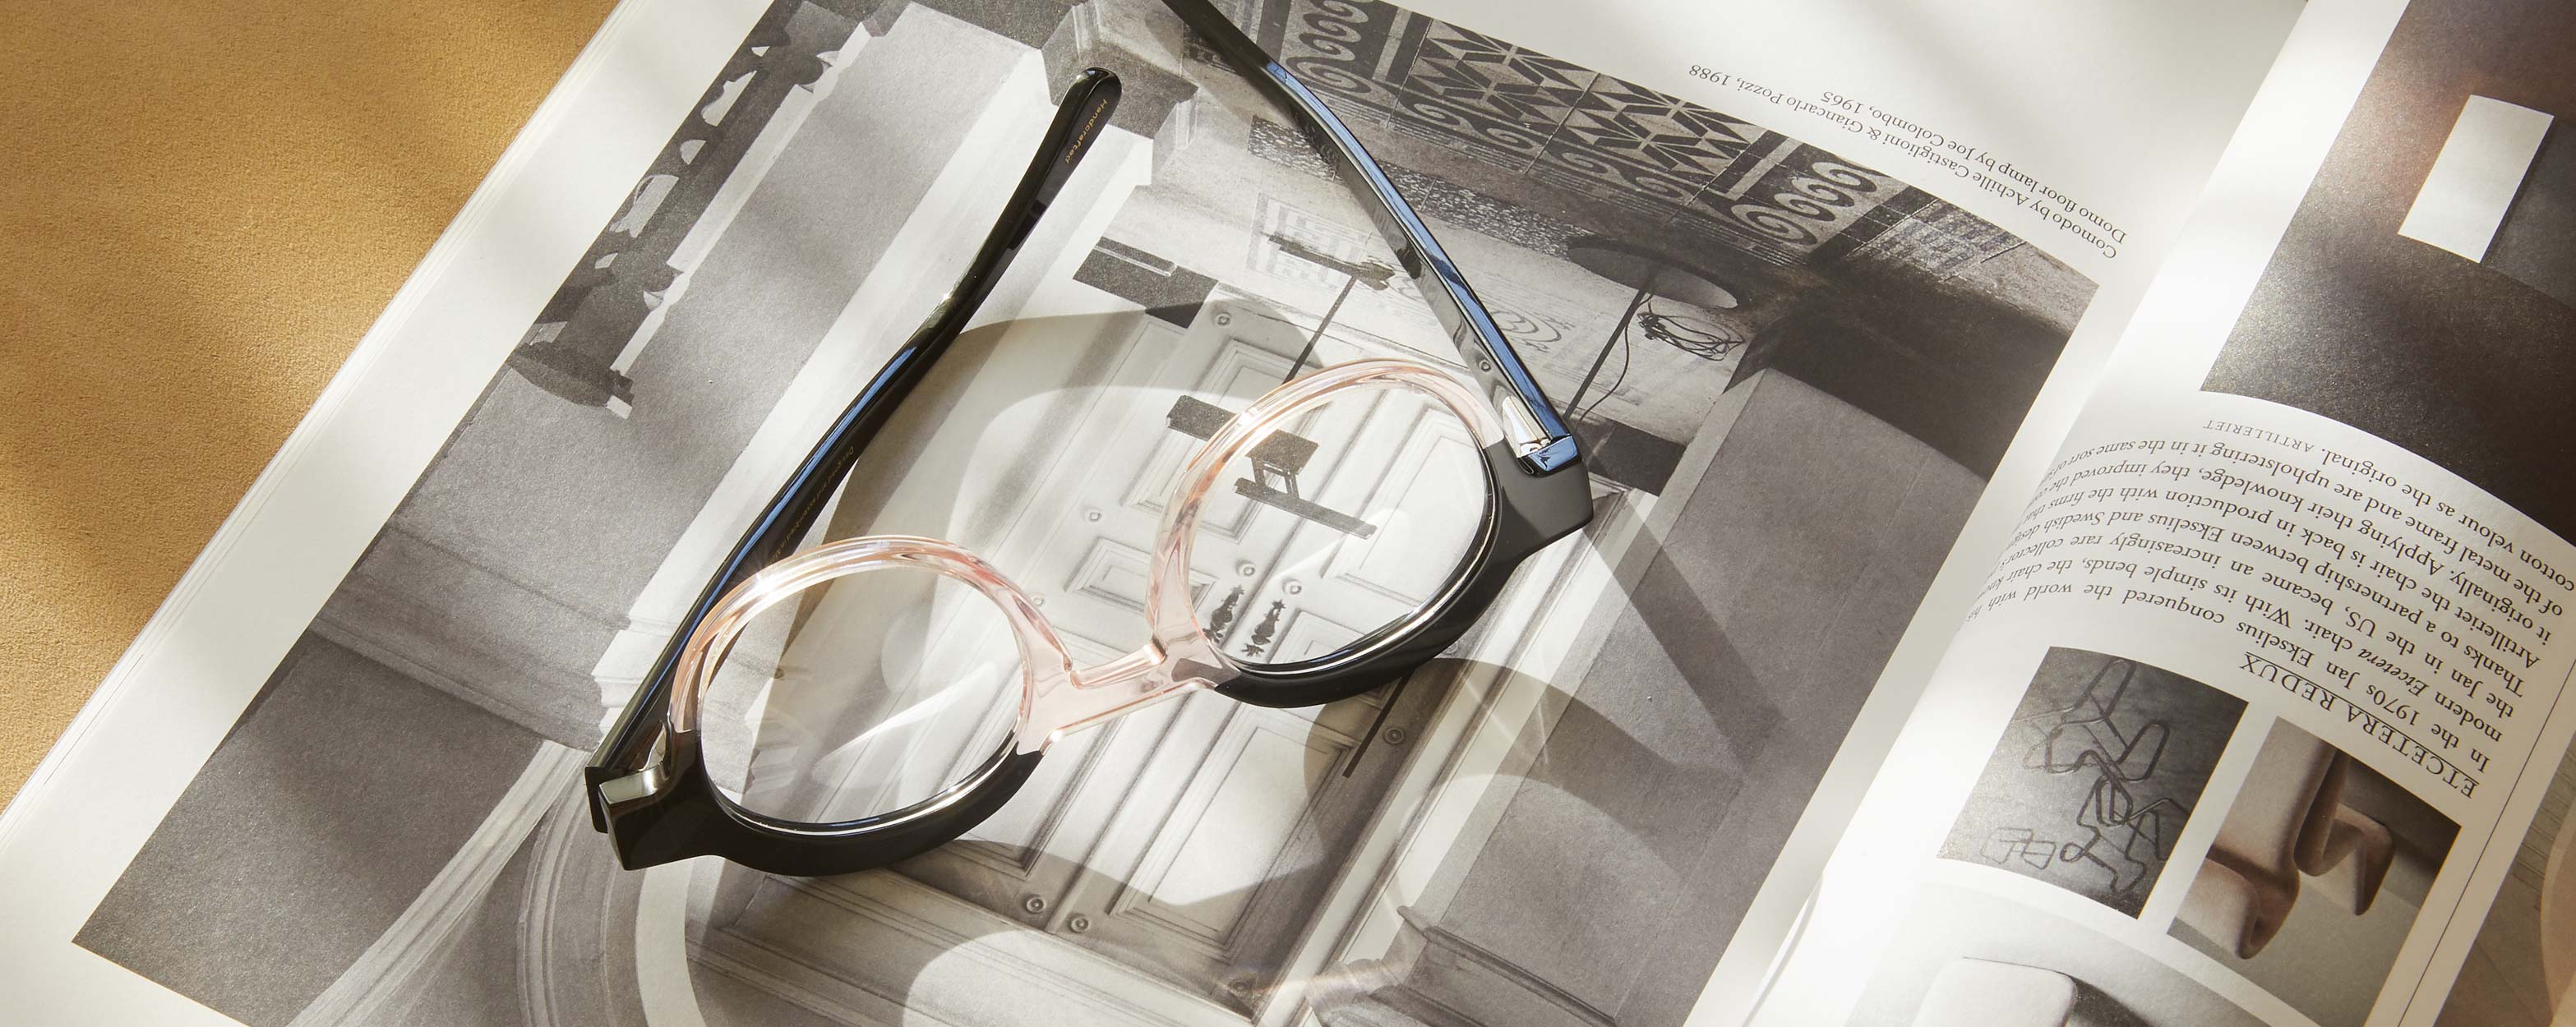 Photo Details of Charlotte Orange & Tortoise Reading Glasses in a room